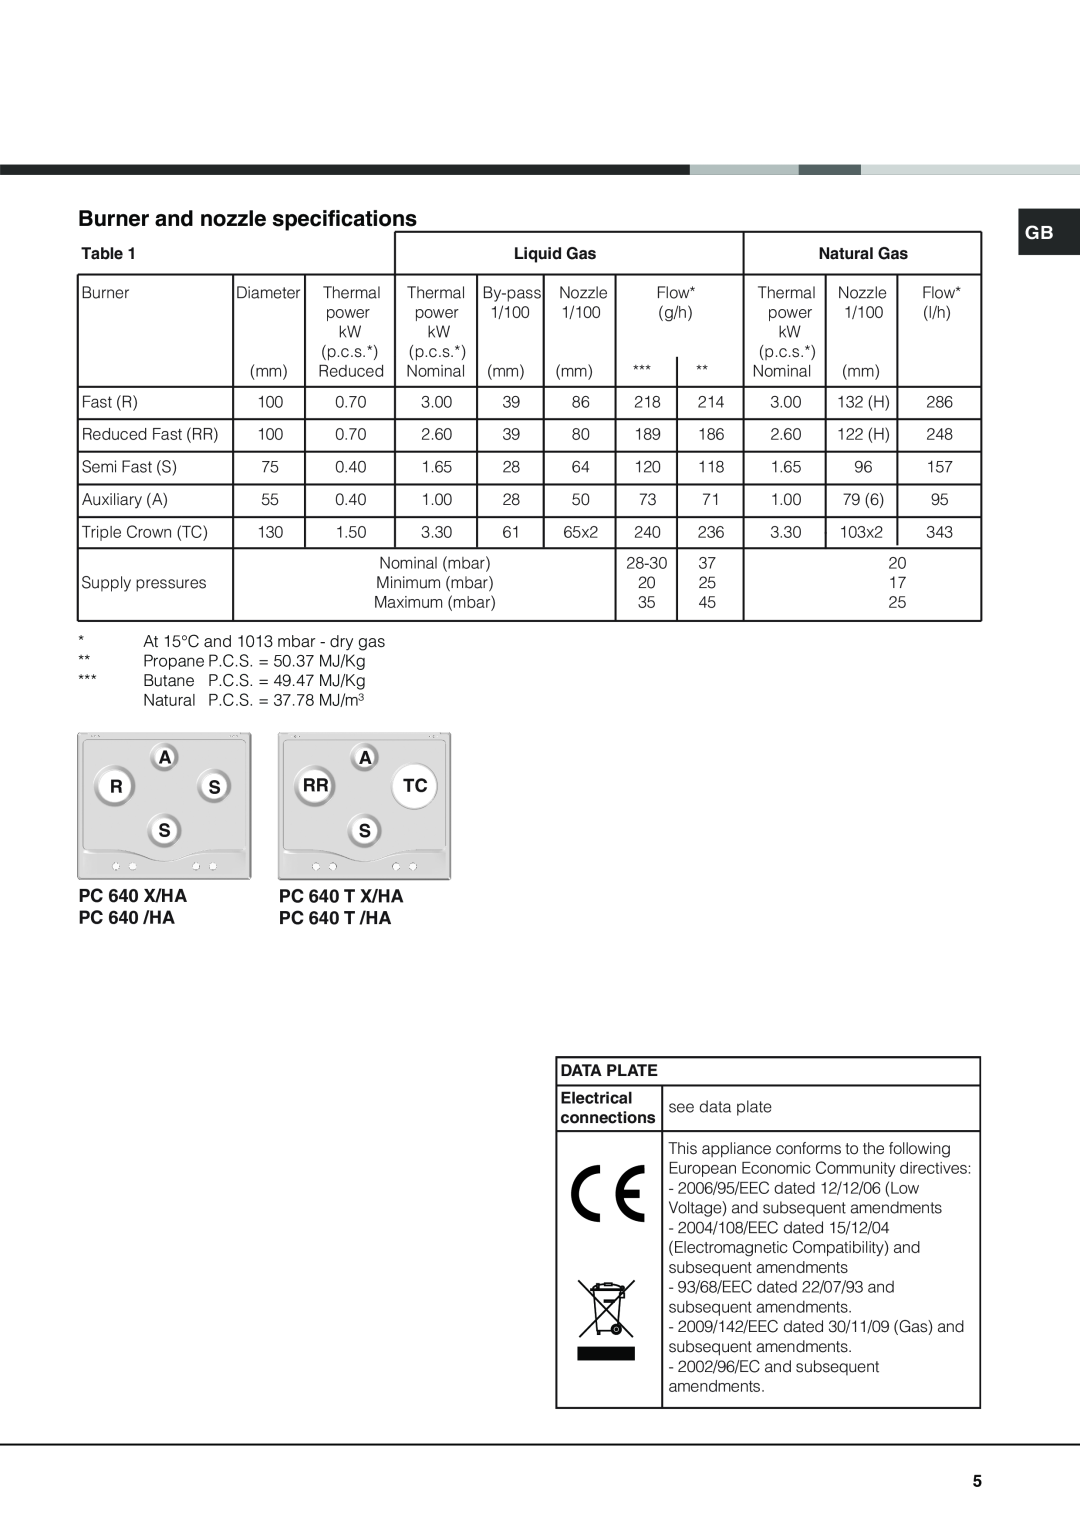 Indesit PC 640 T /HA Aa R S Rr Tc Ss, PC 640 X/HA, PC 640 T X/HA, PC 640 /HA, Burner and nozzle specifications, Liquid Gas 